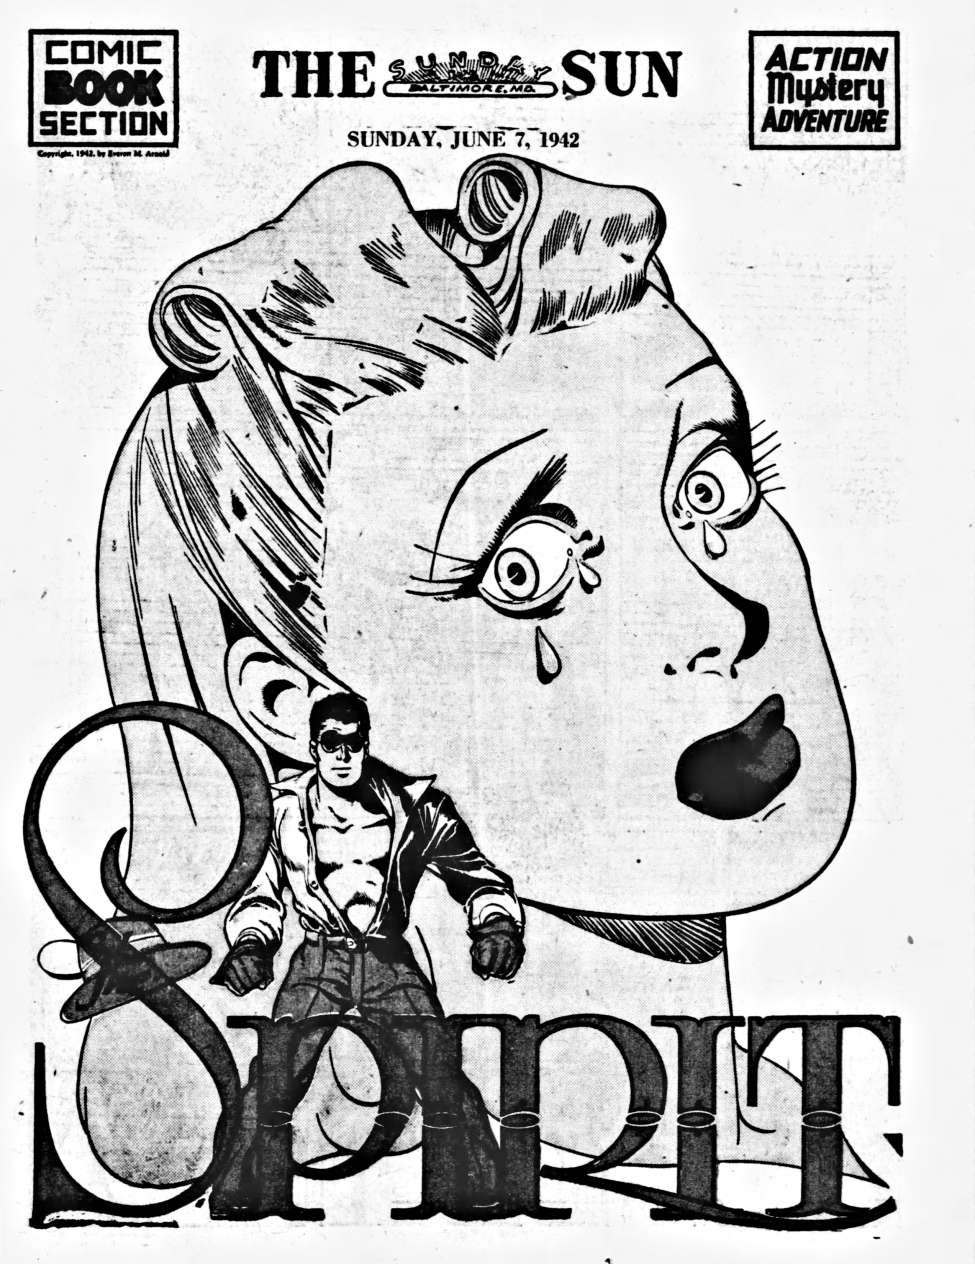 Comic Book Cover For The Spirit (1942-06-07) - Baltimore Sun (b/w) - Version 1